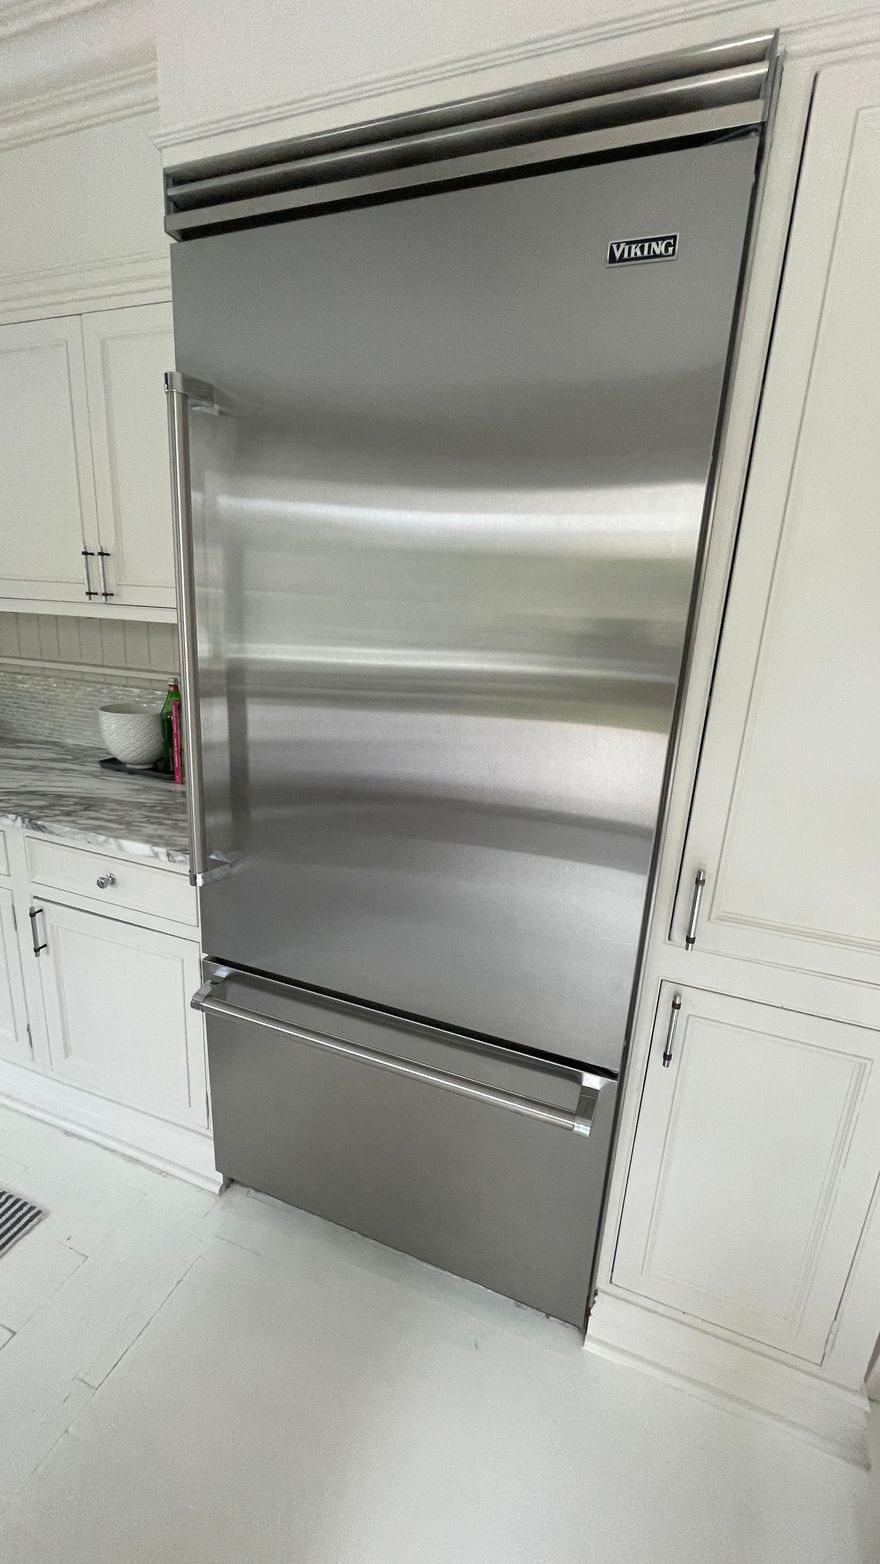 Viking refrigerator repair by Level Appliance Repair